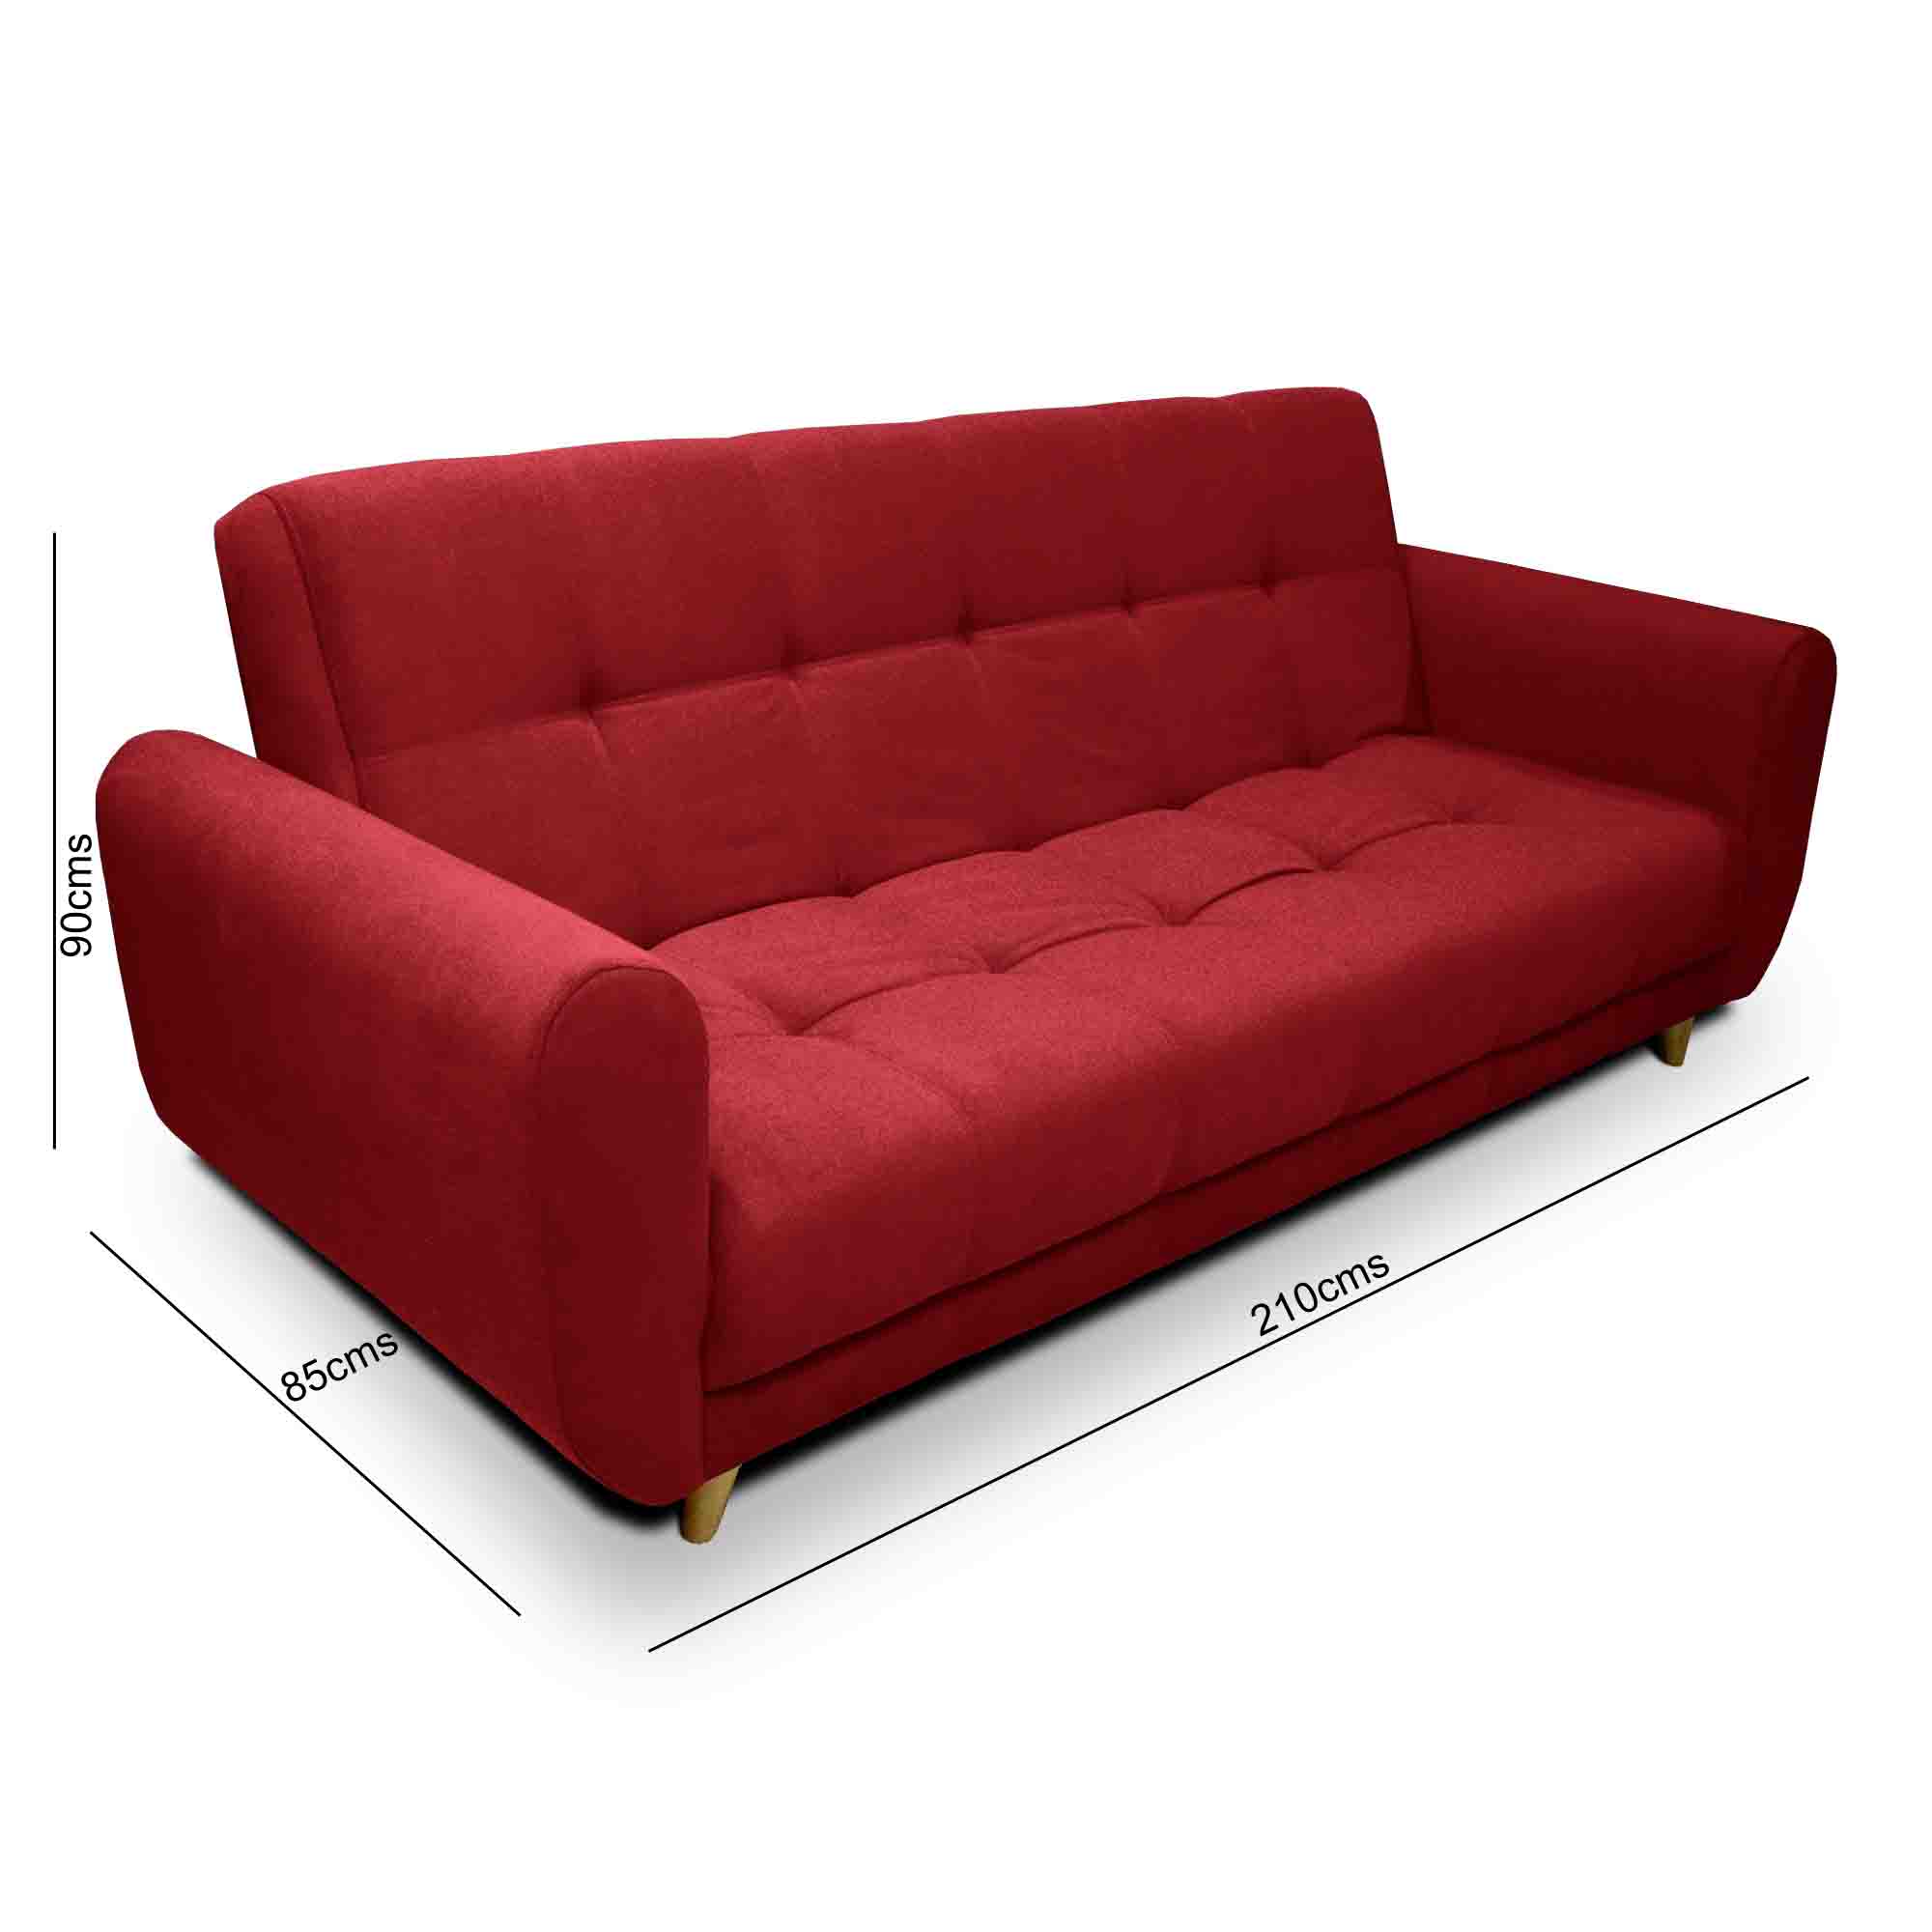 Sofa Cama Comfort Sistema Clic Clac Color Rojo (2)